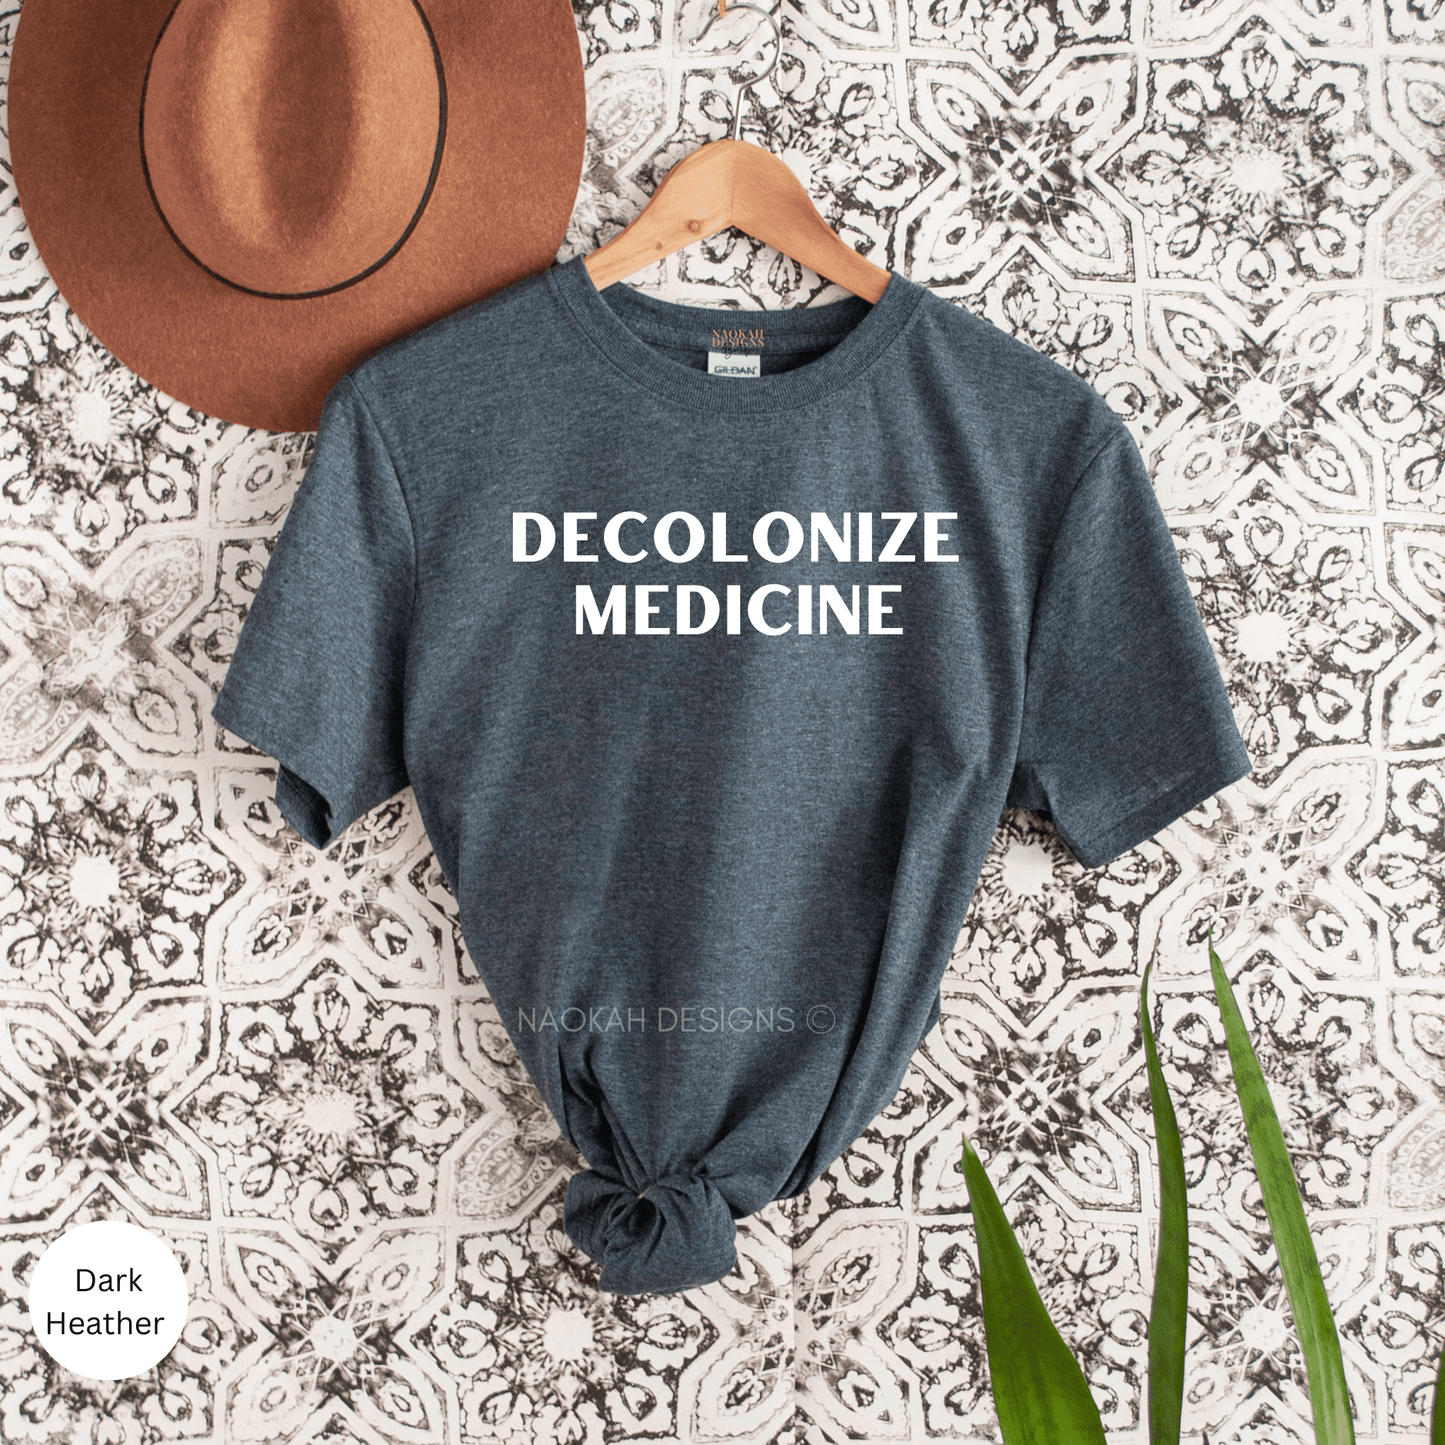 Decolonize Medicine Shirt, Decolonize Healthcare Shirt, Confronting Medical Colonialism, Decolonizing Public Health, Indigenize Medical School, Indigenize Nursing, Decolonize Wellness